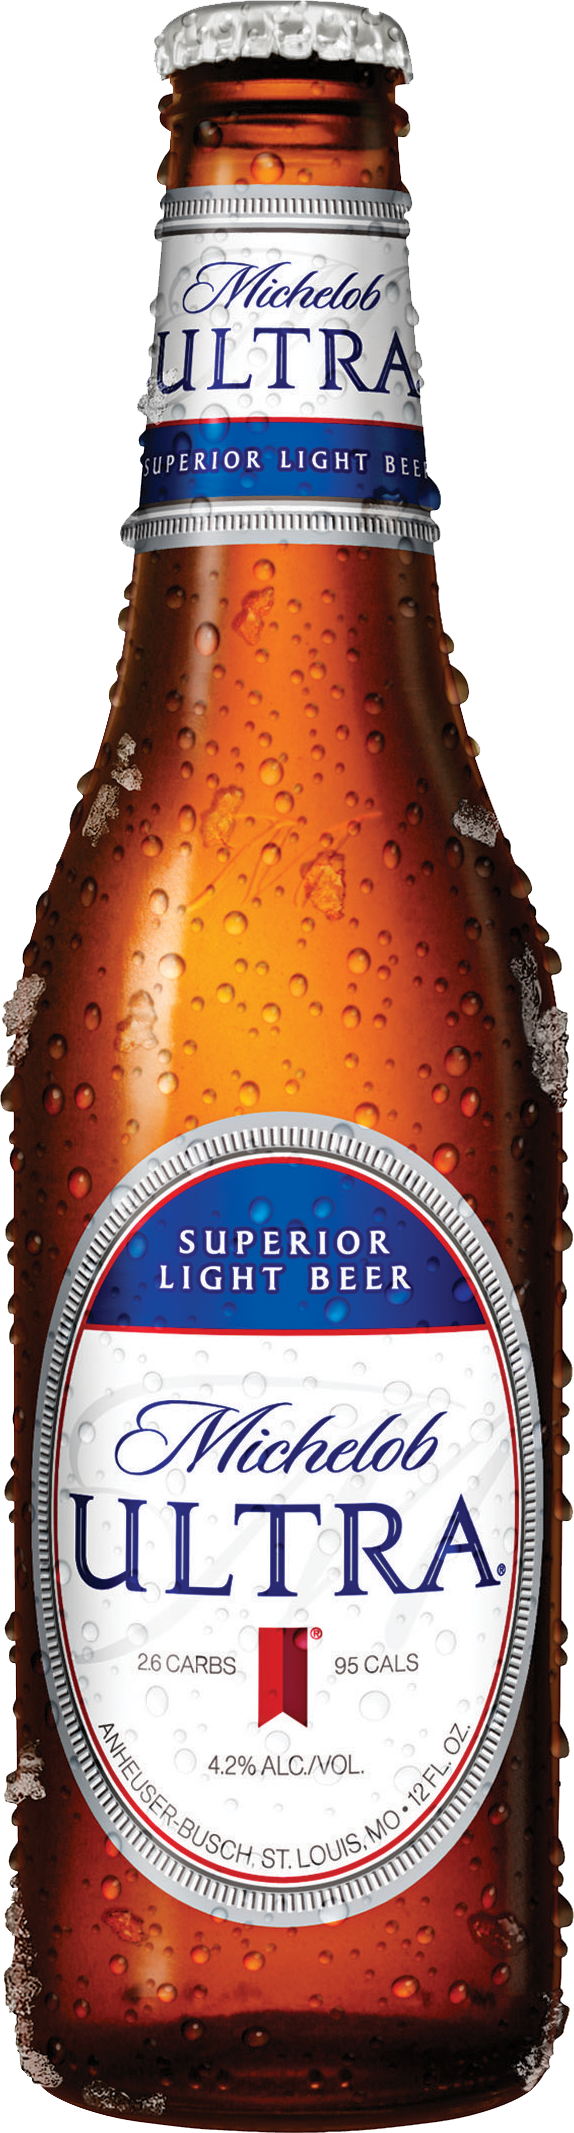 Michelob Ultra Light Beer Bottle PNG image